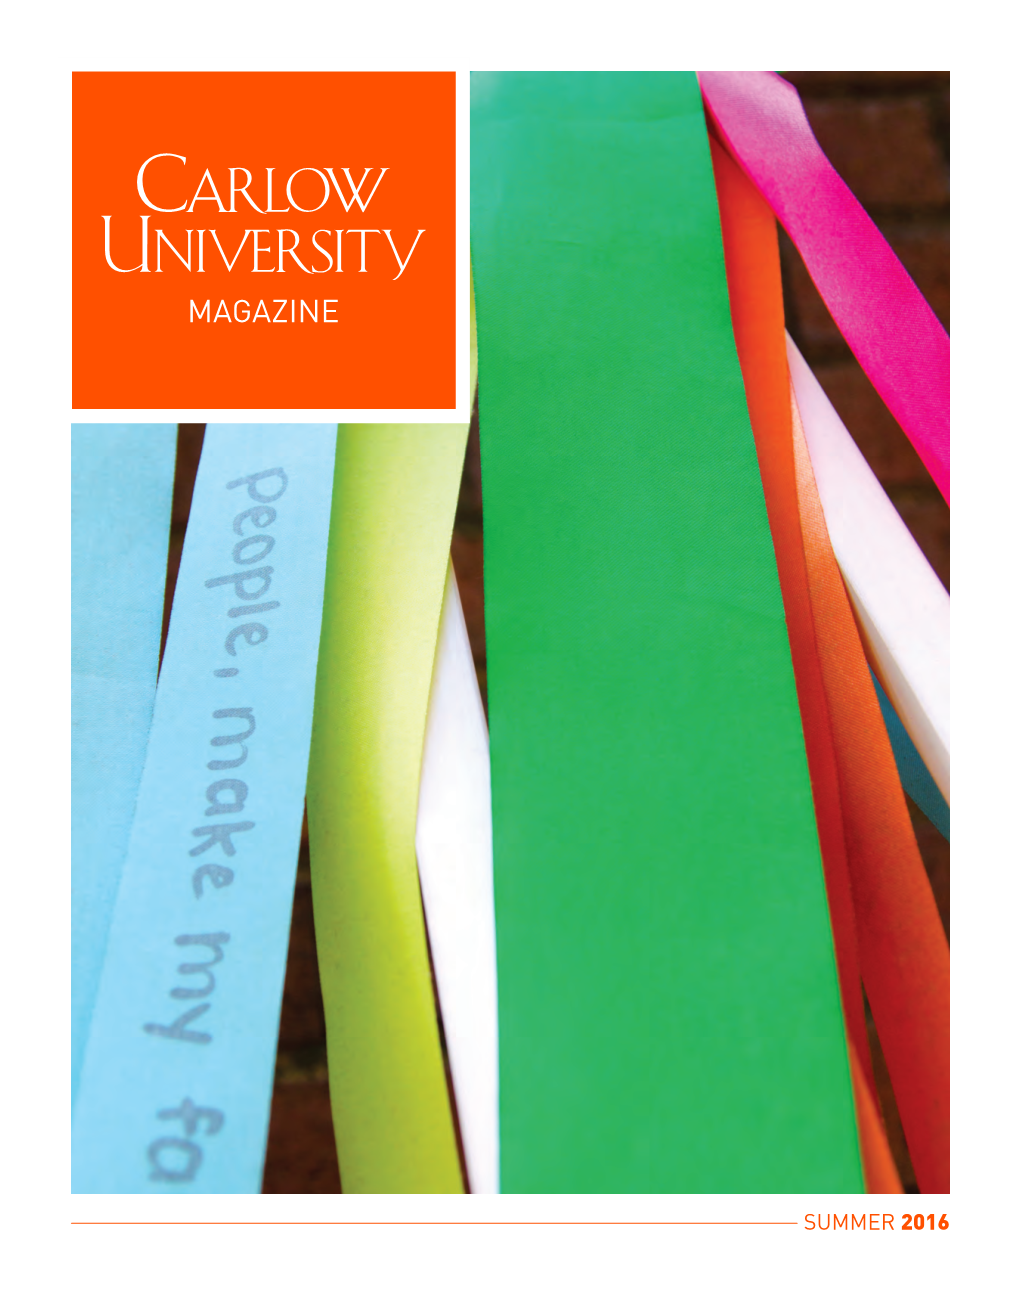 Carlow University Magazine, Summer 2016